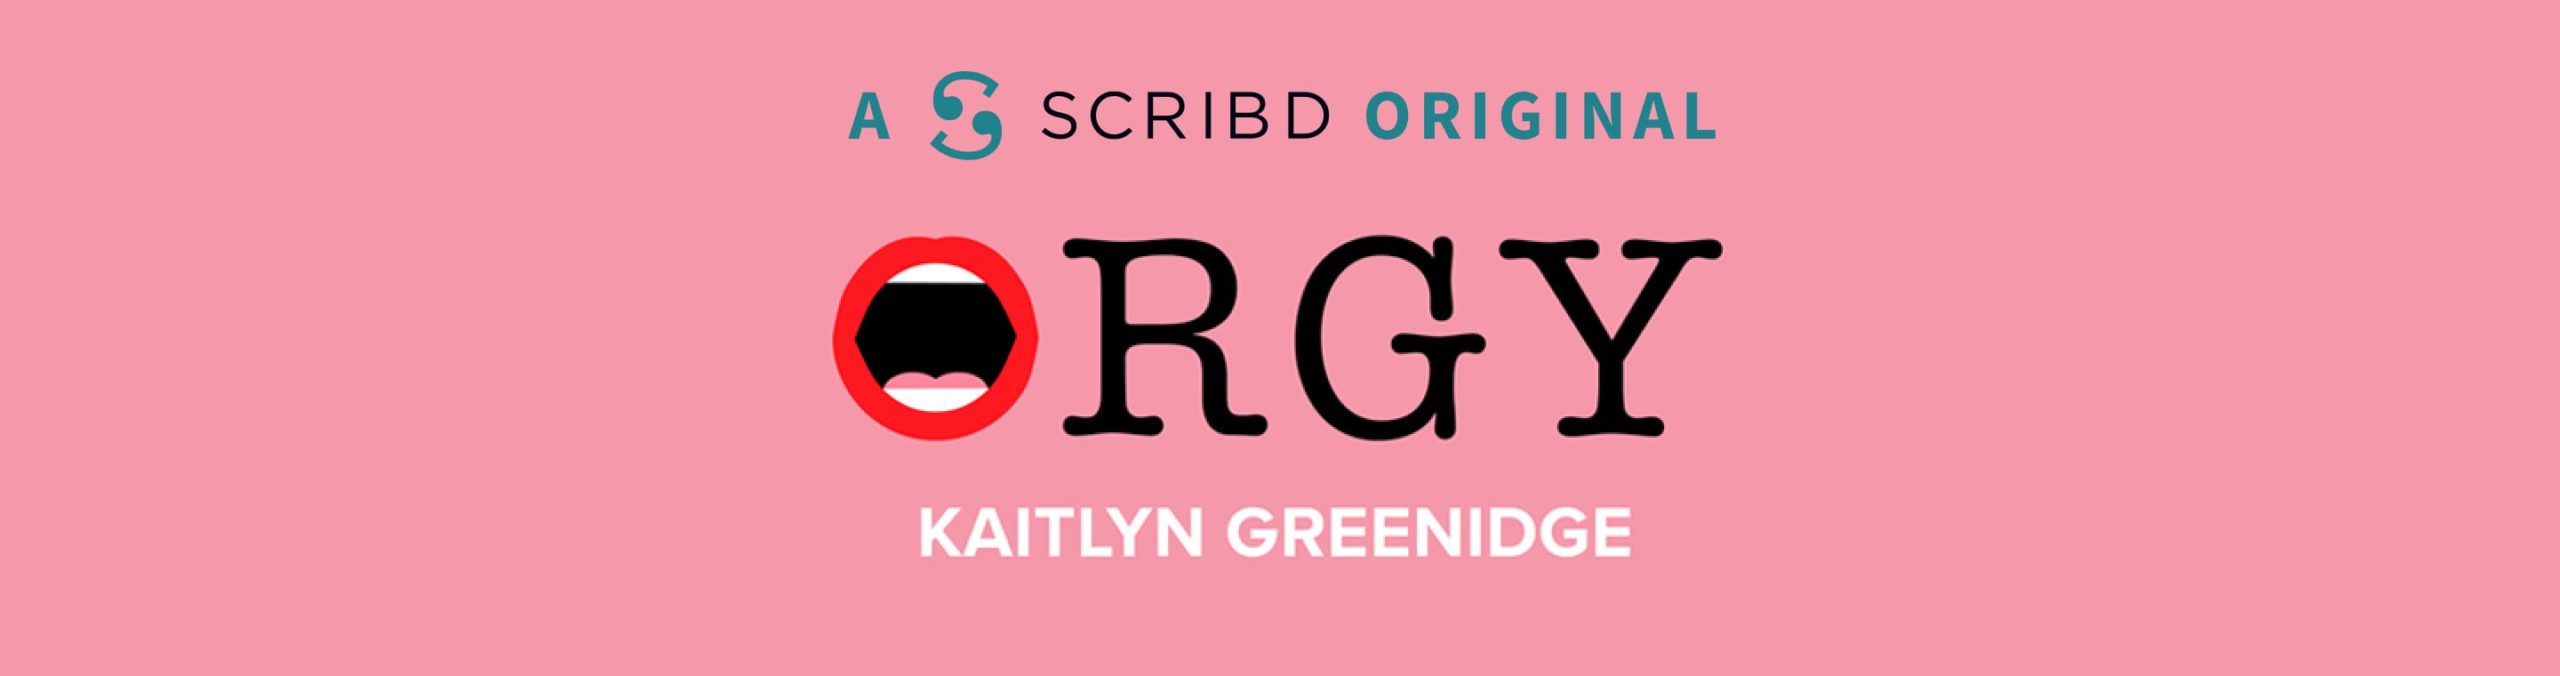 Kaitlyn Greenidge on the joys of sex